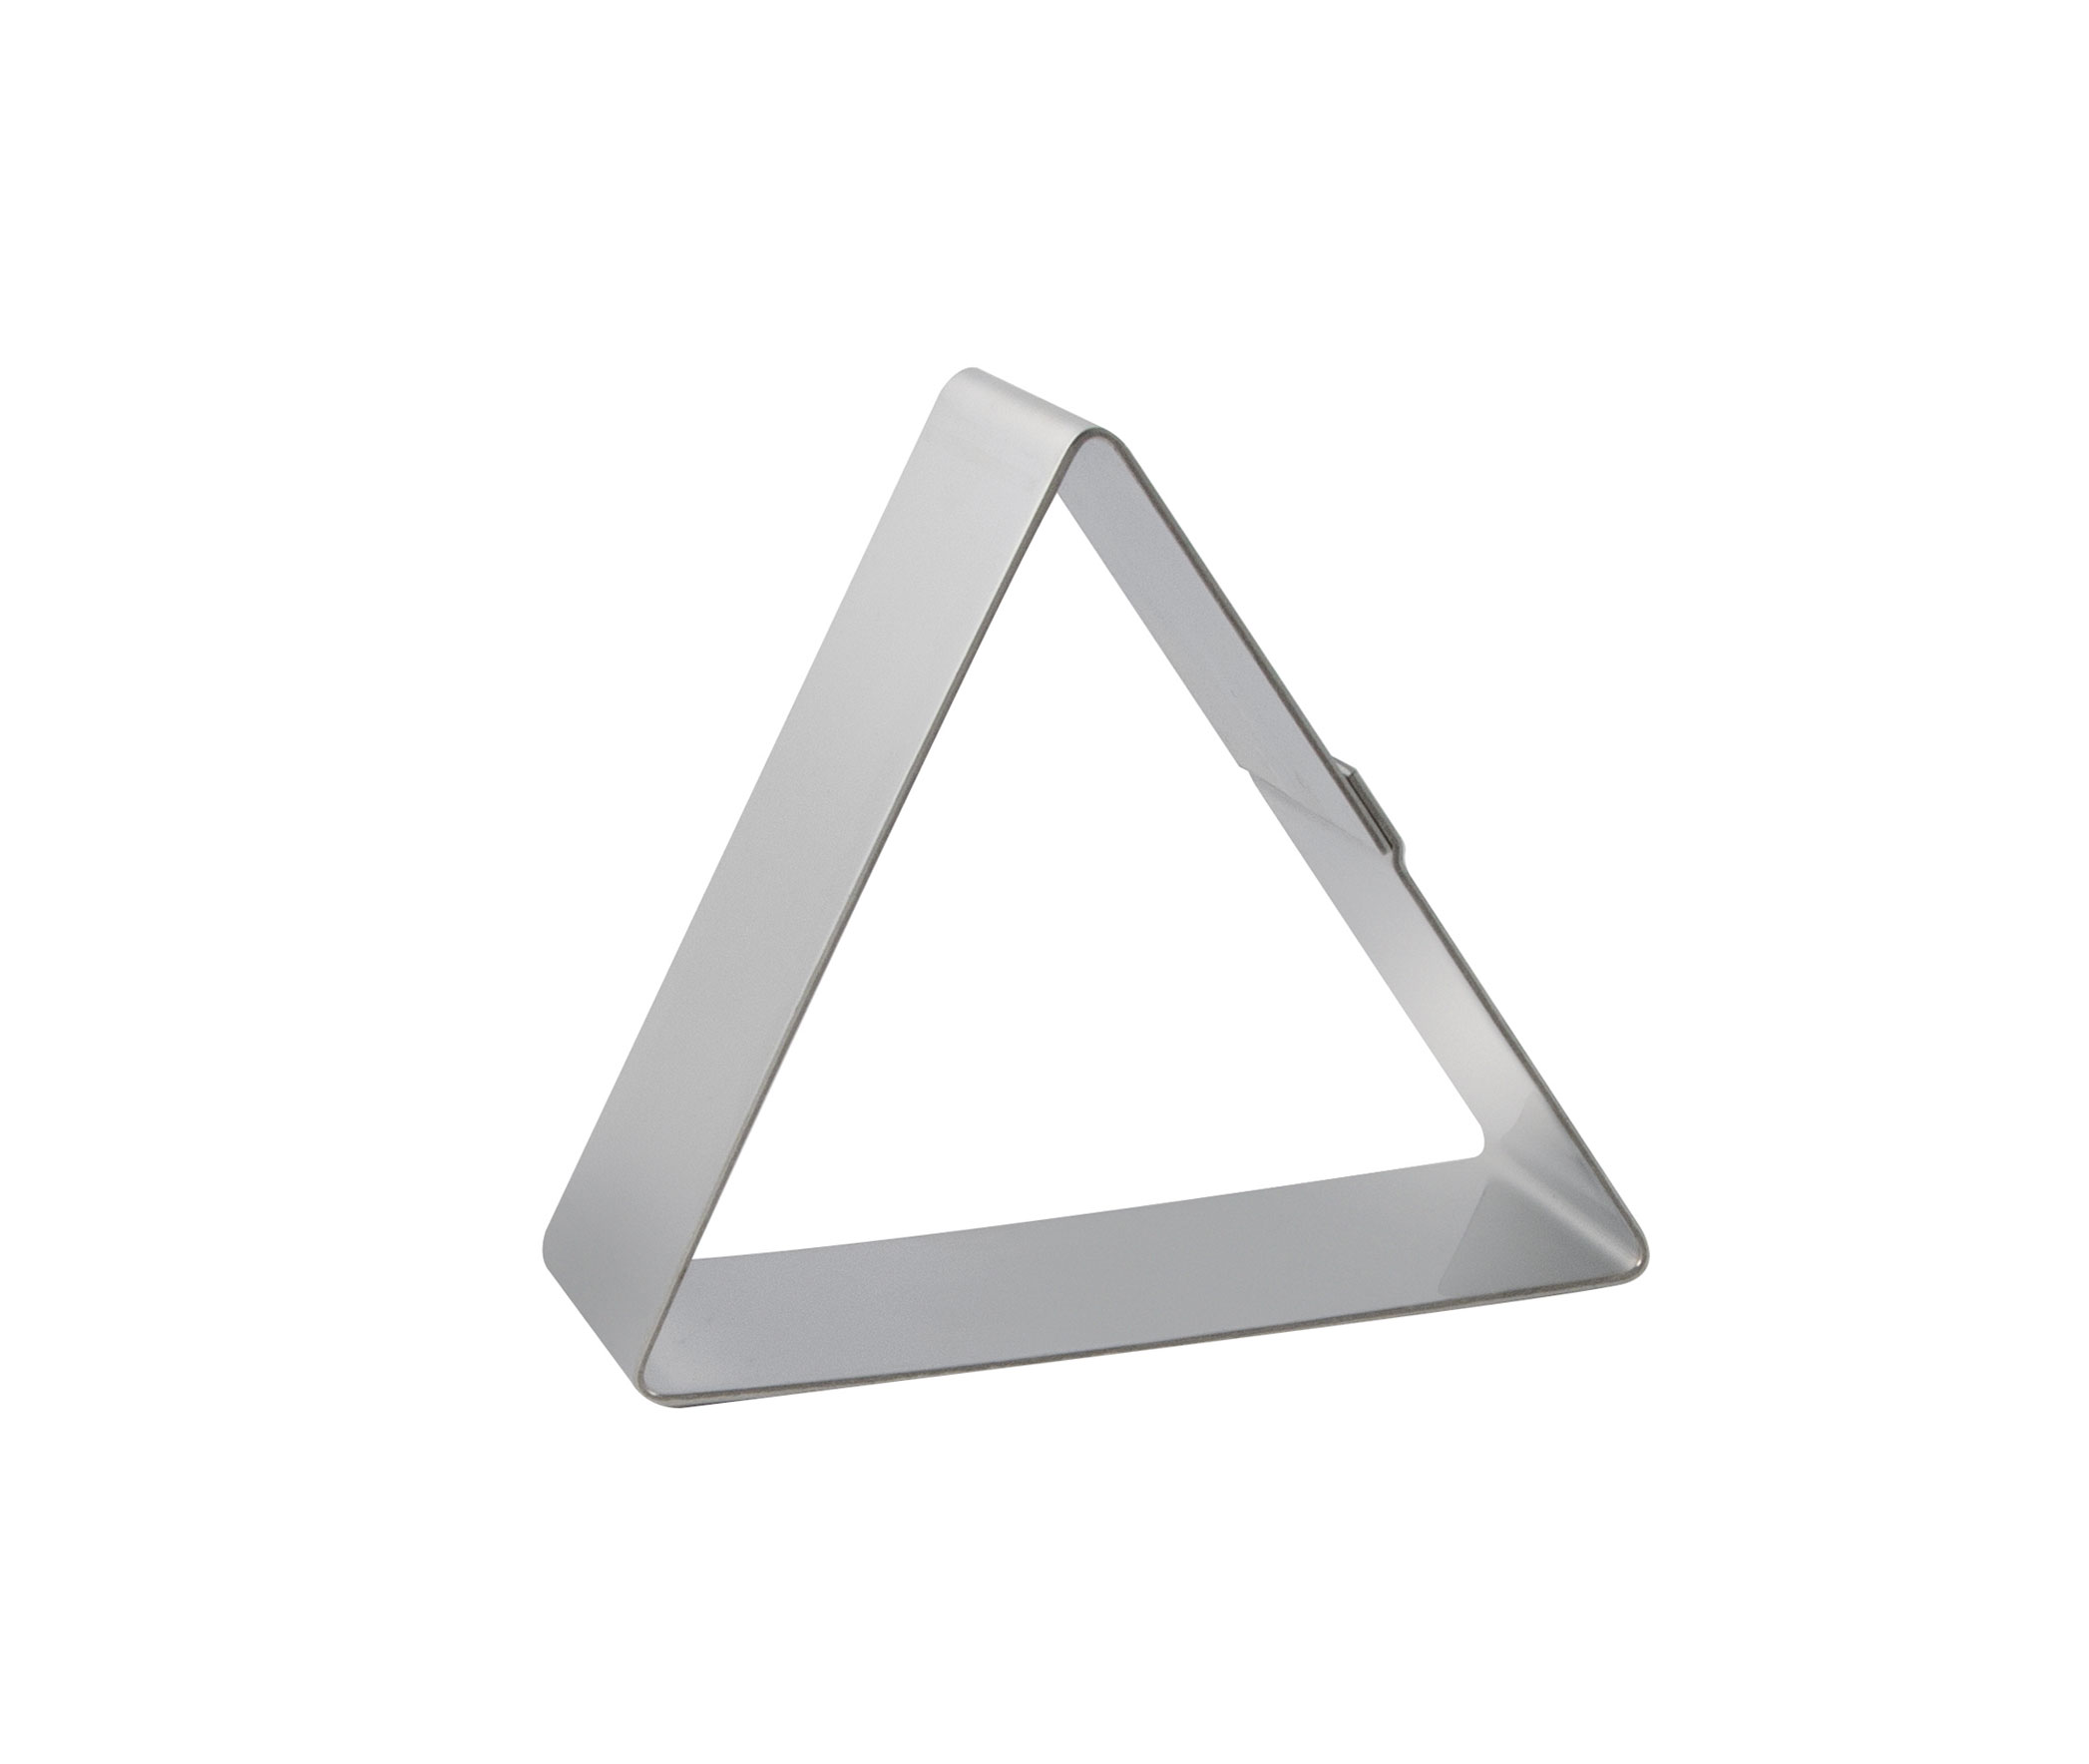 Triangular - h 50 mm